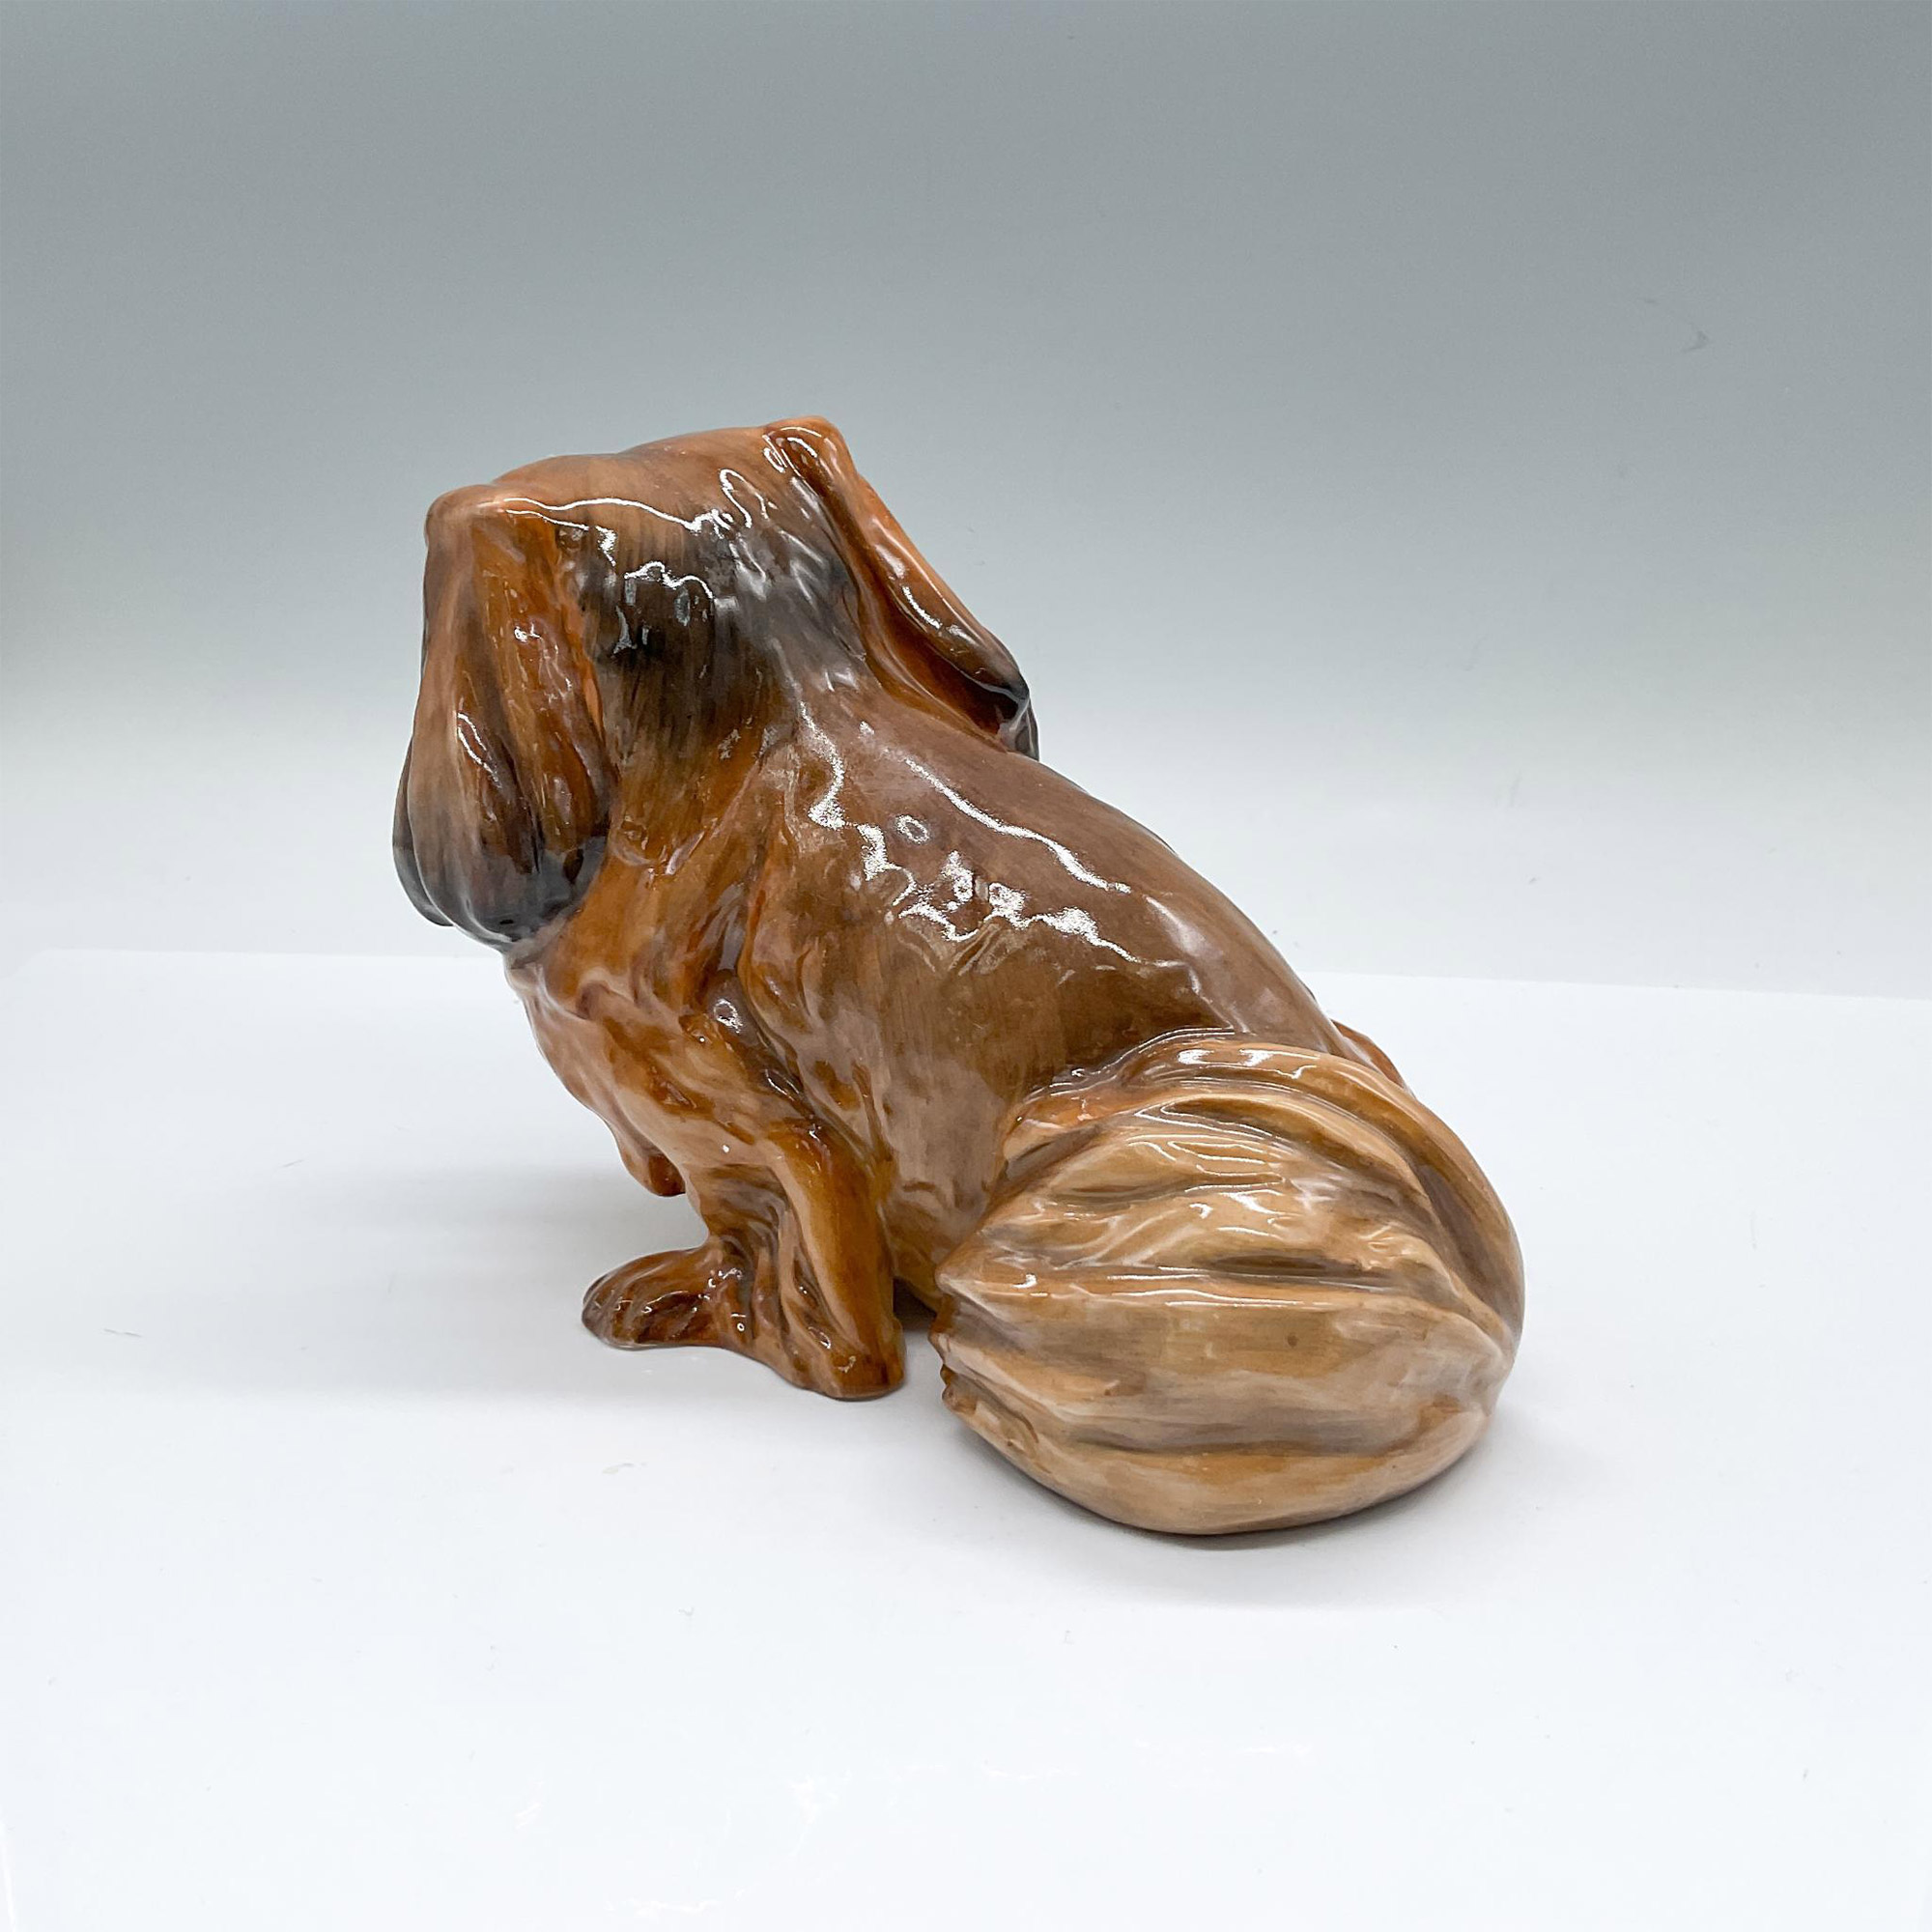 Pekingese Ch. Biddee of Ifield - HN1039 - Royal Doulton Animal Figurine - Image 2 of 3